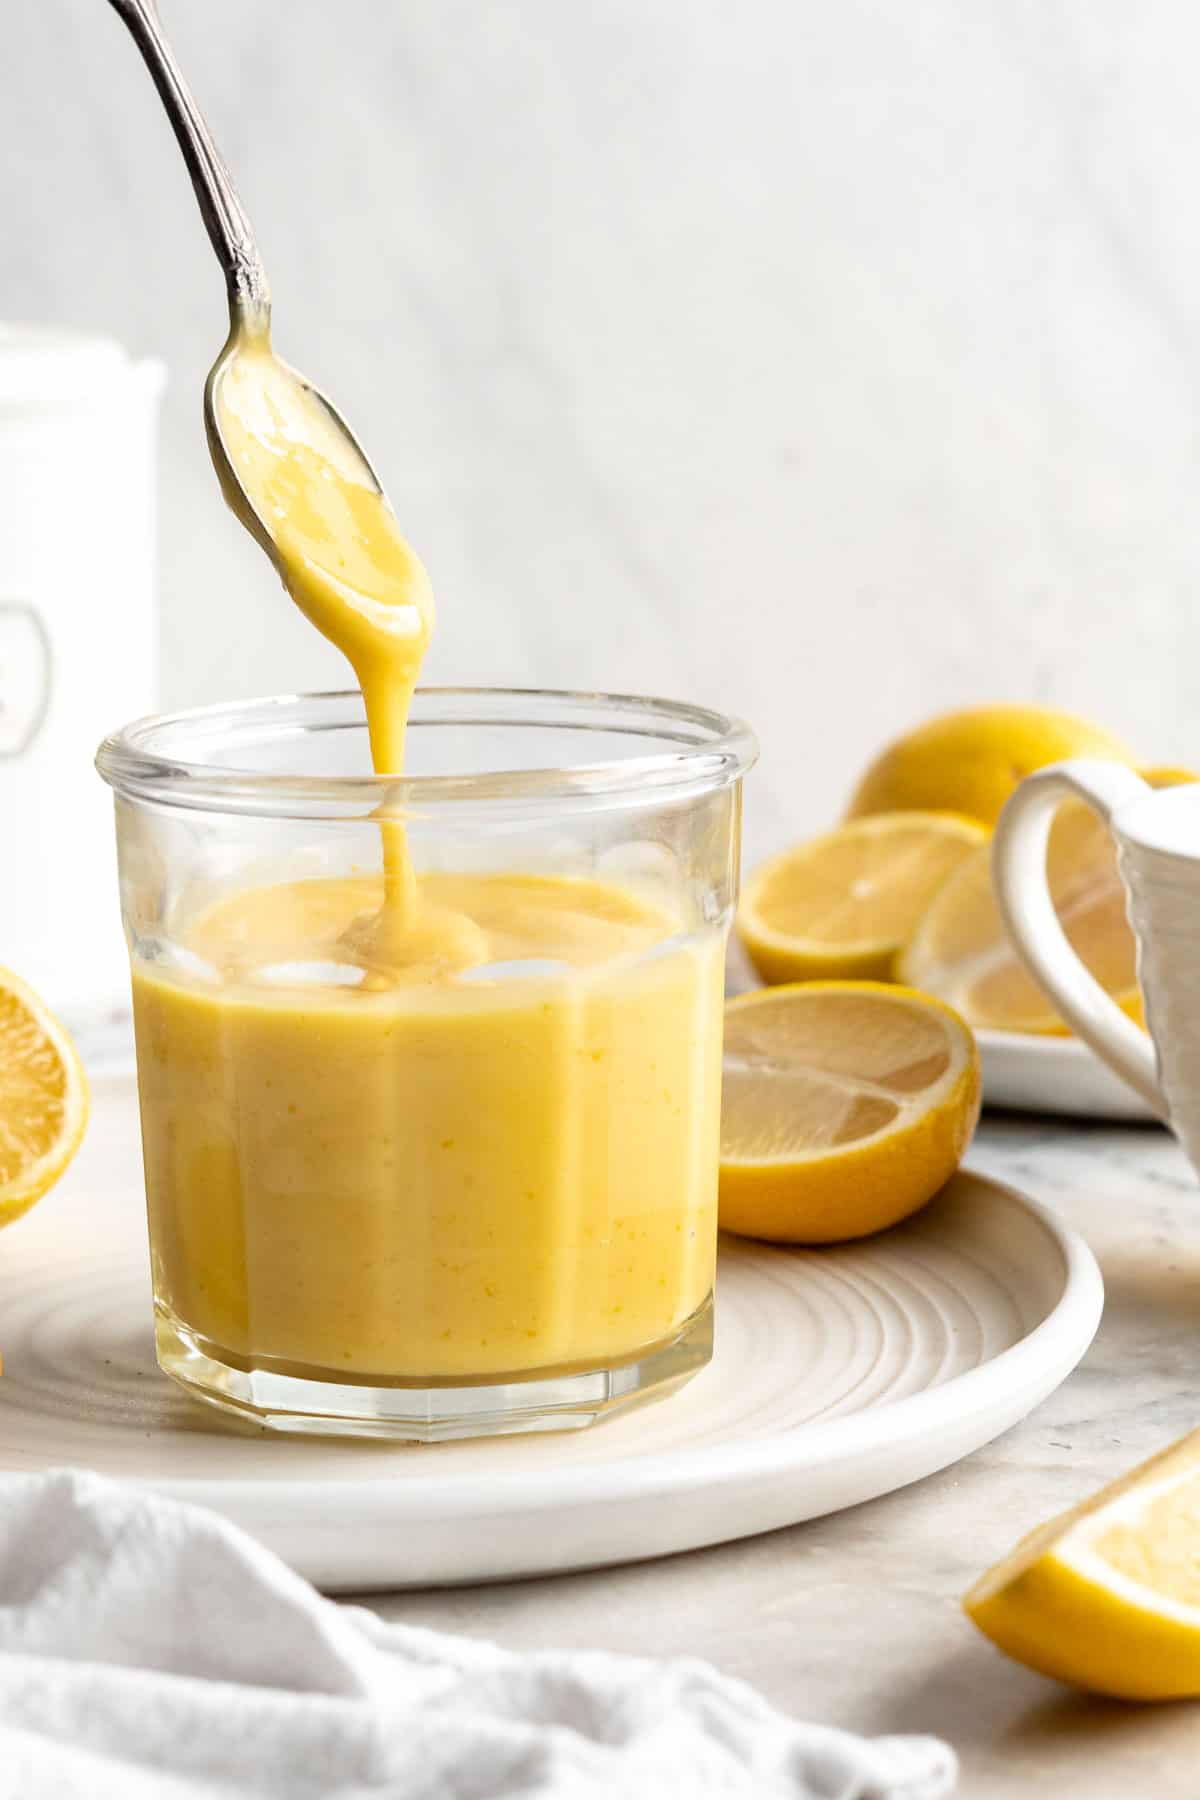 Spoon drizzling vegan lemon curd back into jar set on plate